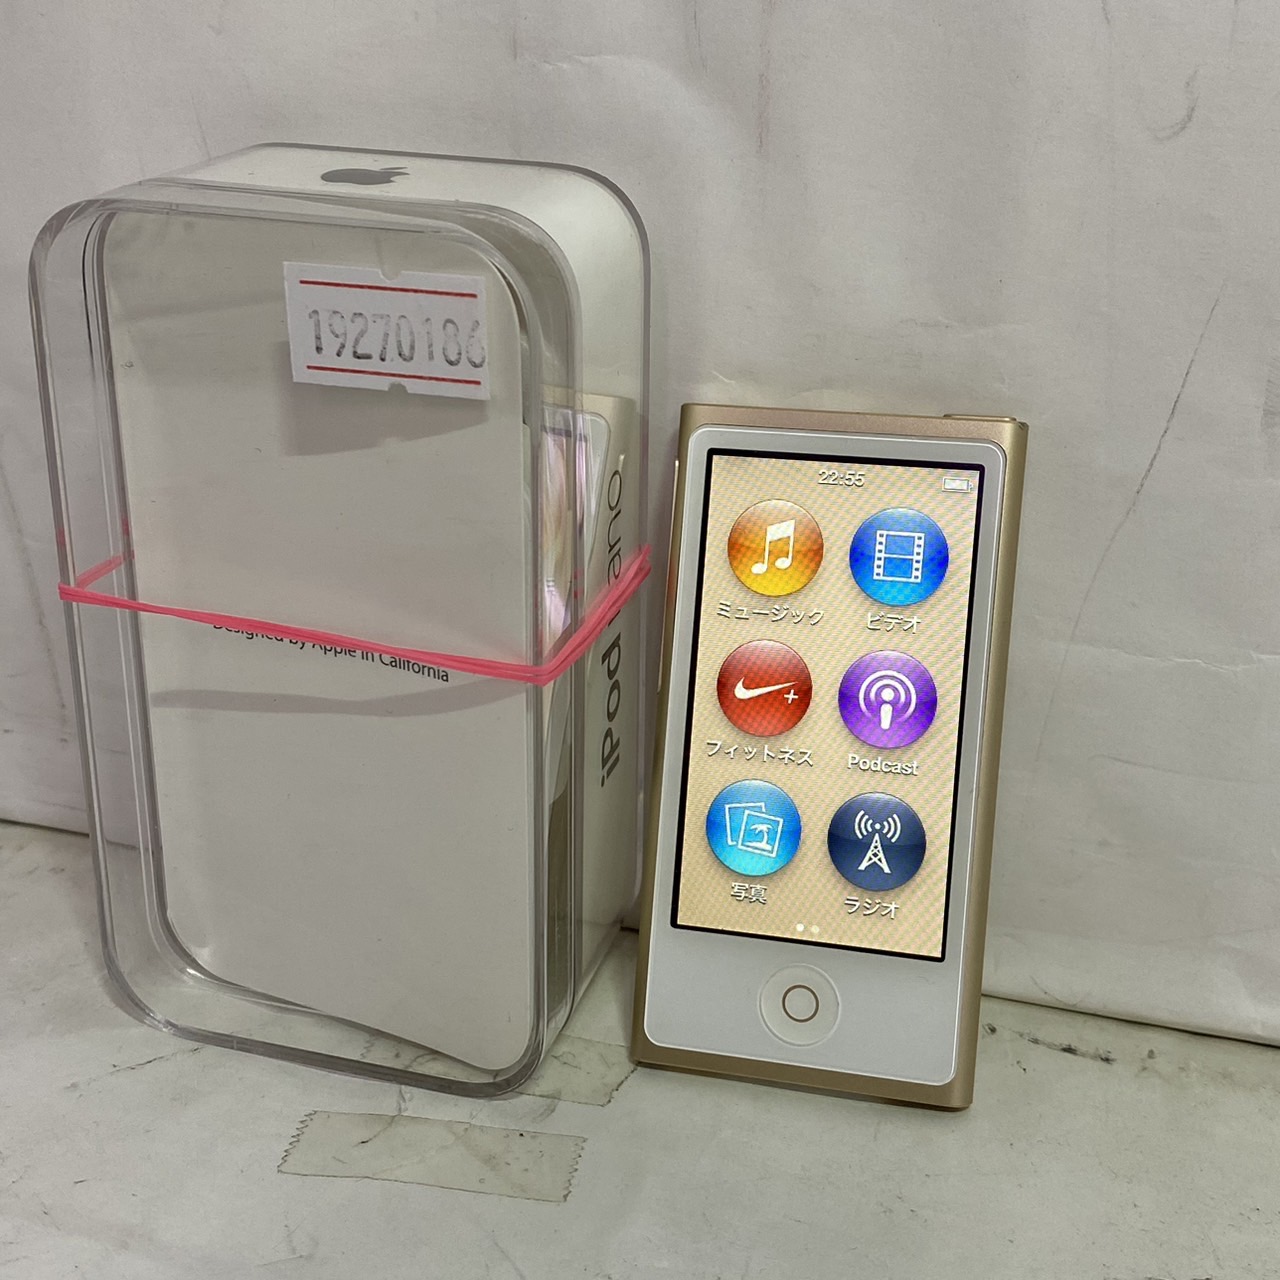 APPLE(アップル) iPod nano 第7世代 [16GB]の激安通販(詳細情報 